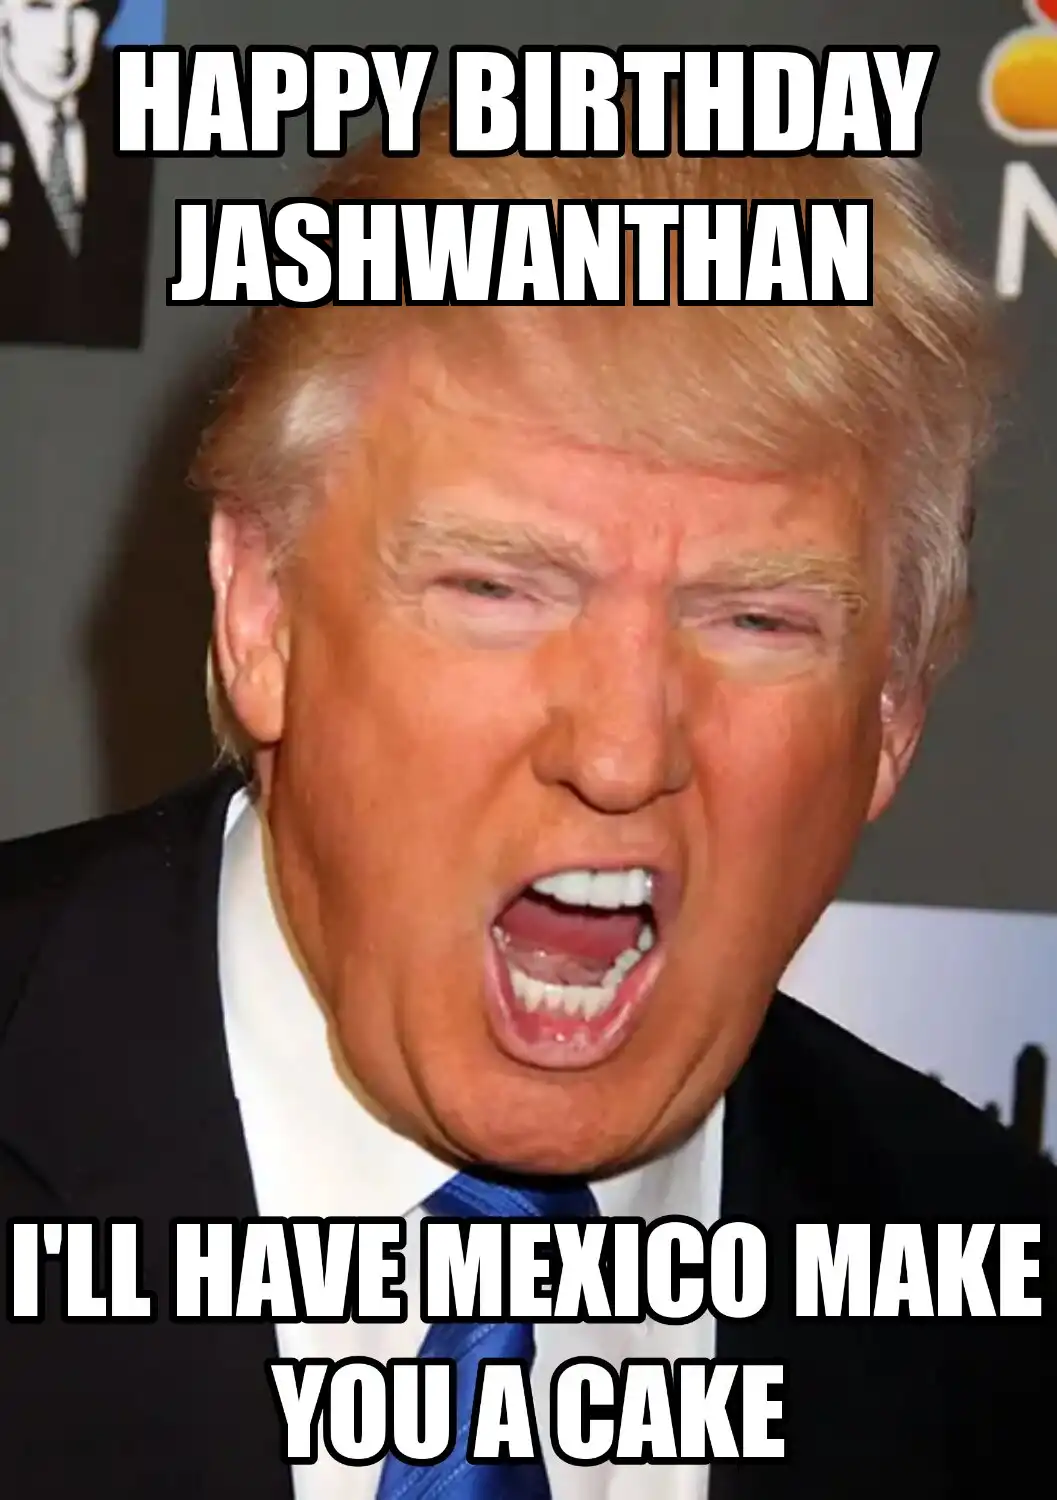 Happy Birthday Jashwanthan Mexico Make You A Cake Meme